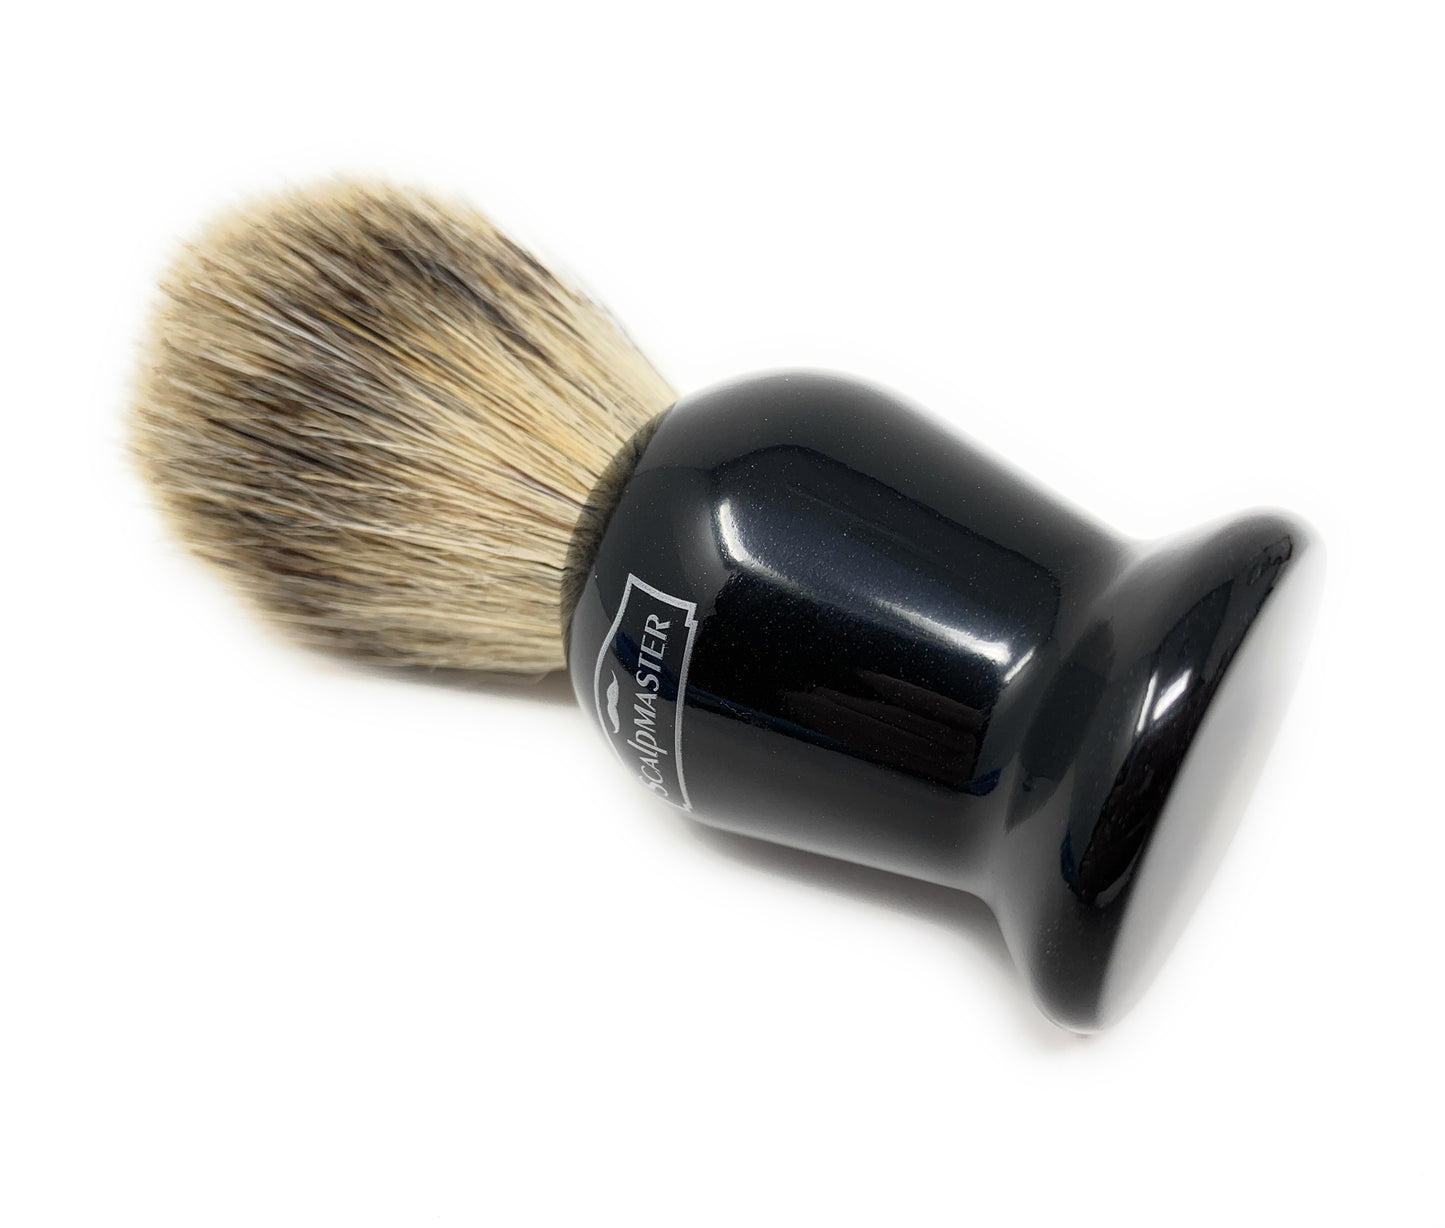 Scalpmaster Boar/Badger Mix Shaving Brush Shave Brush Black Handle SB-17